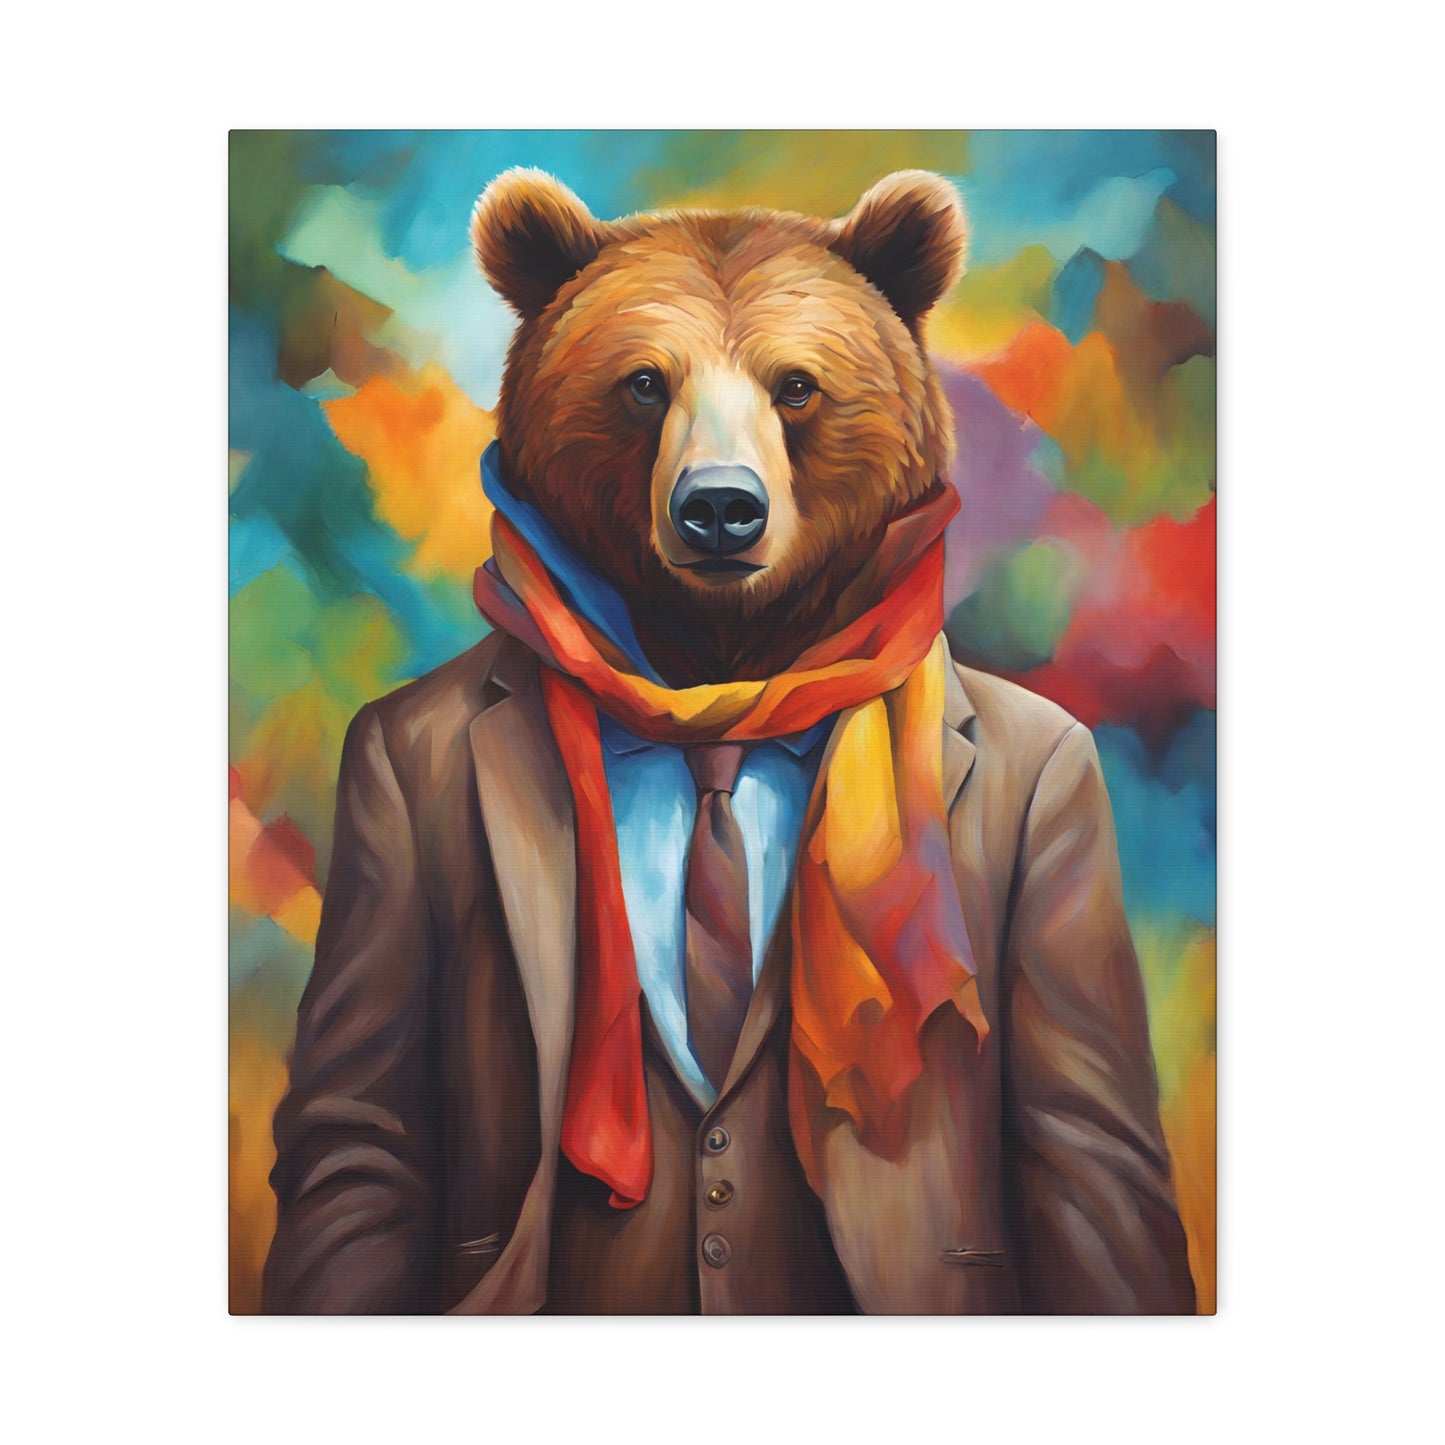 Canvas Gallery Wraps - Animal Life Bear